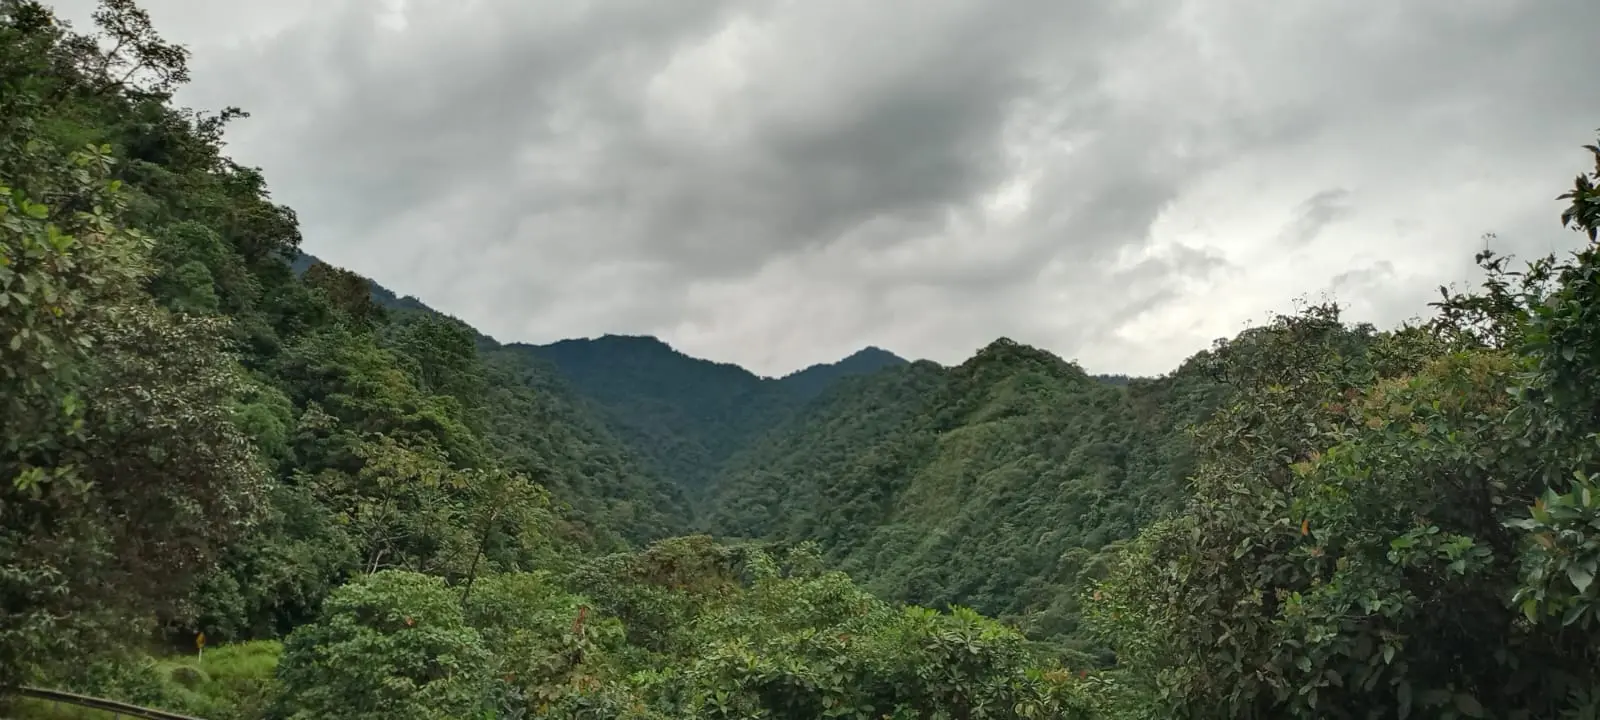 Territory of Indigenous Communities Inga and Kamëntša Putumayo -Colombia